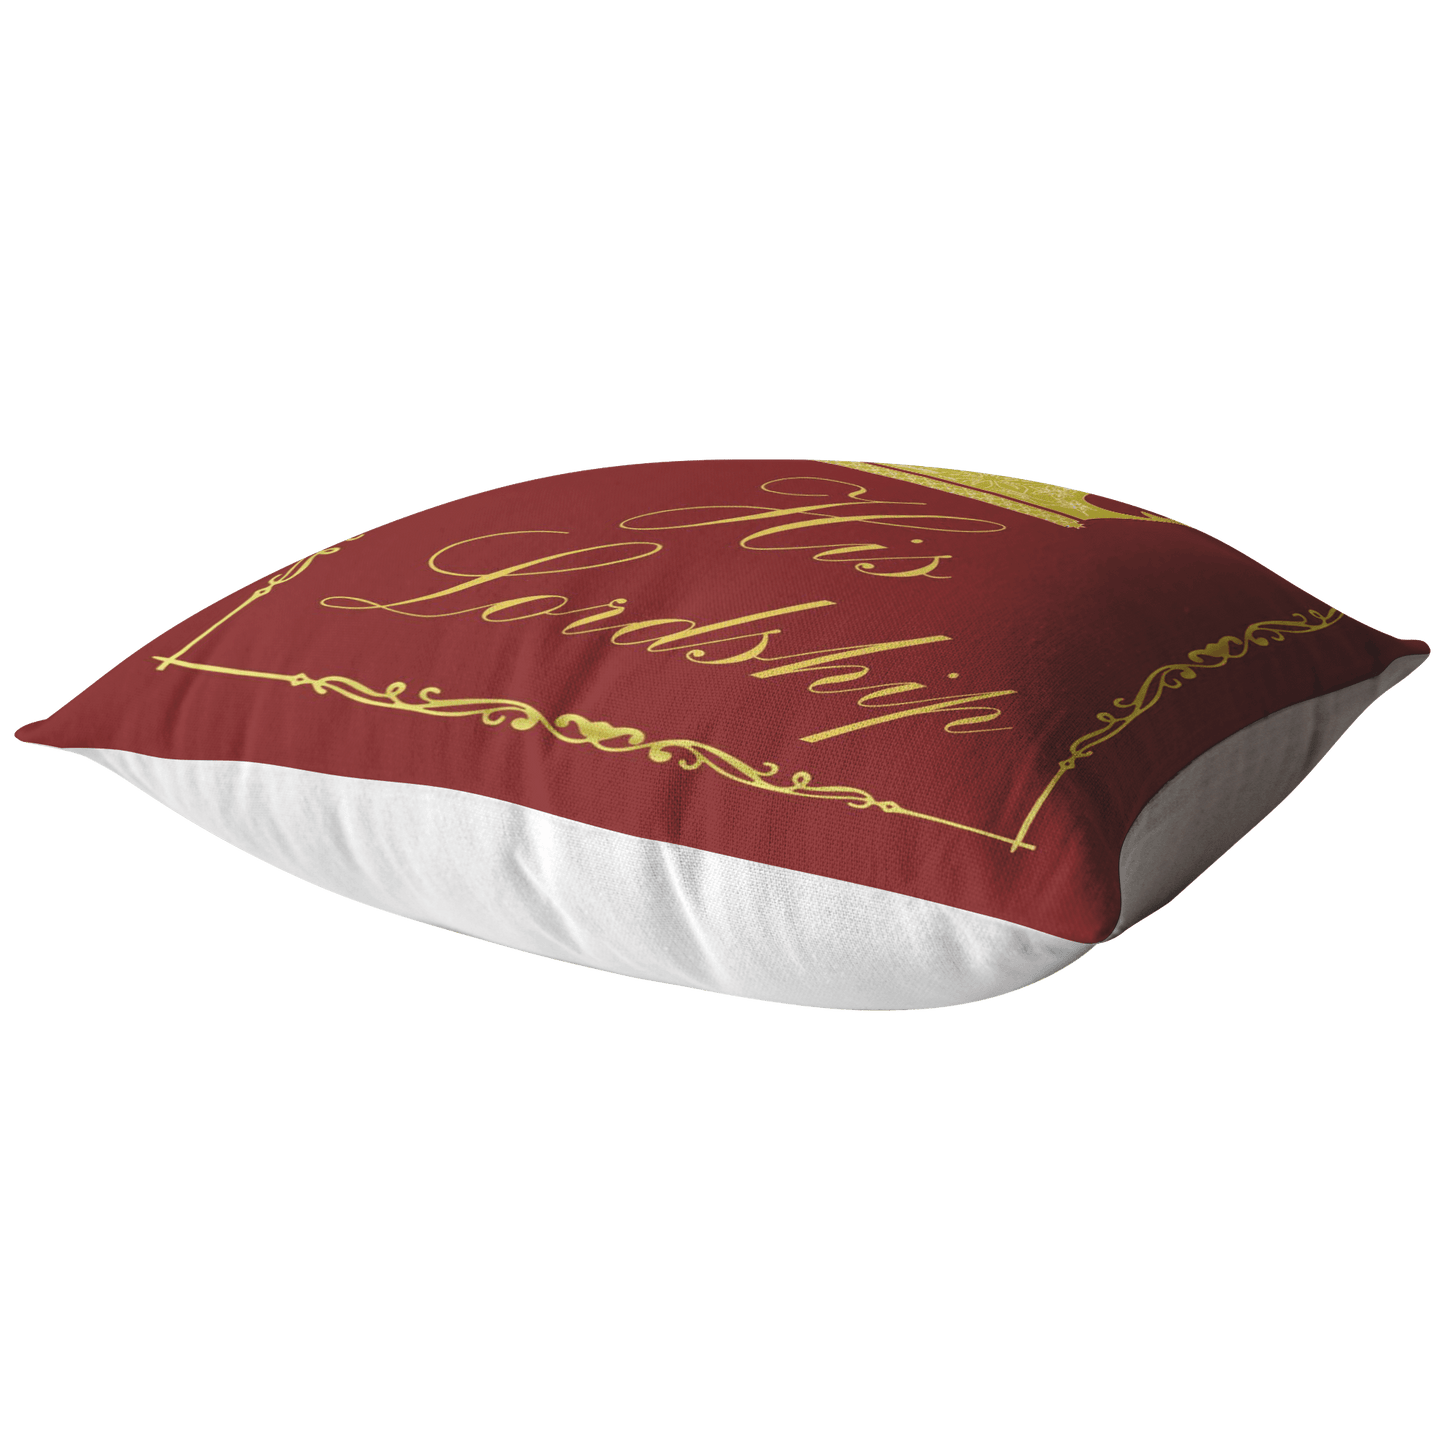 His Lordship Pillow - Giftagic